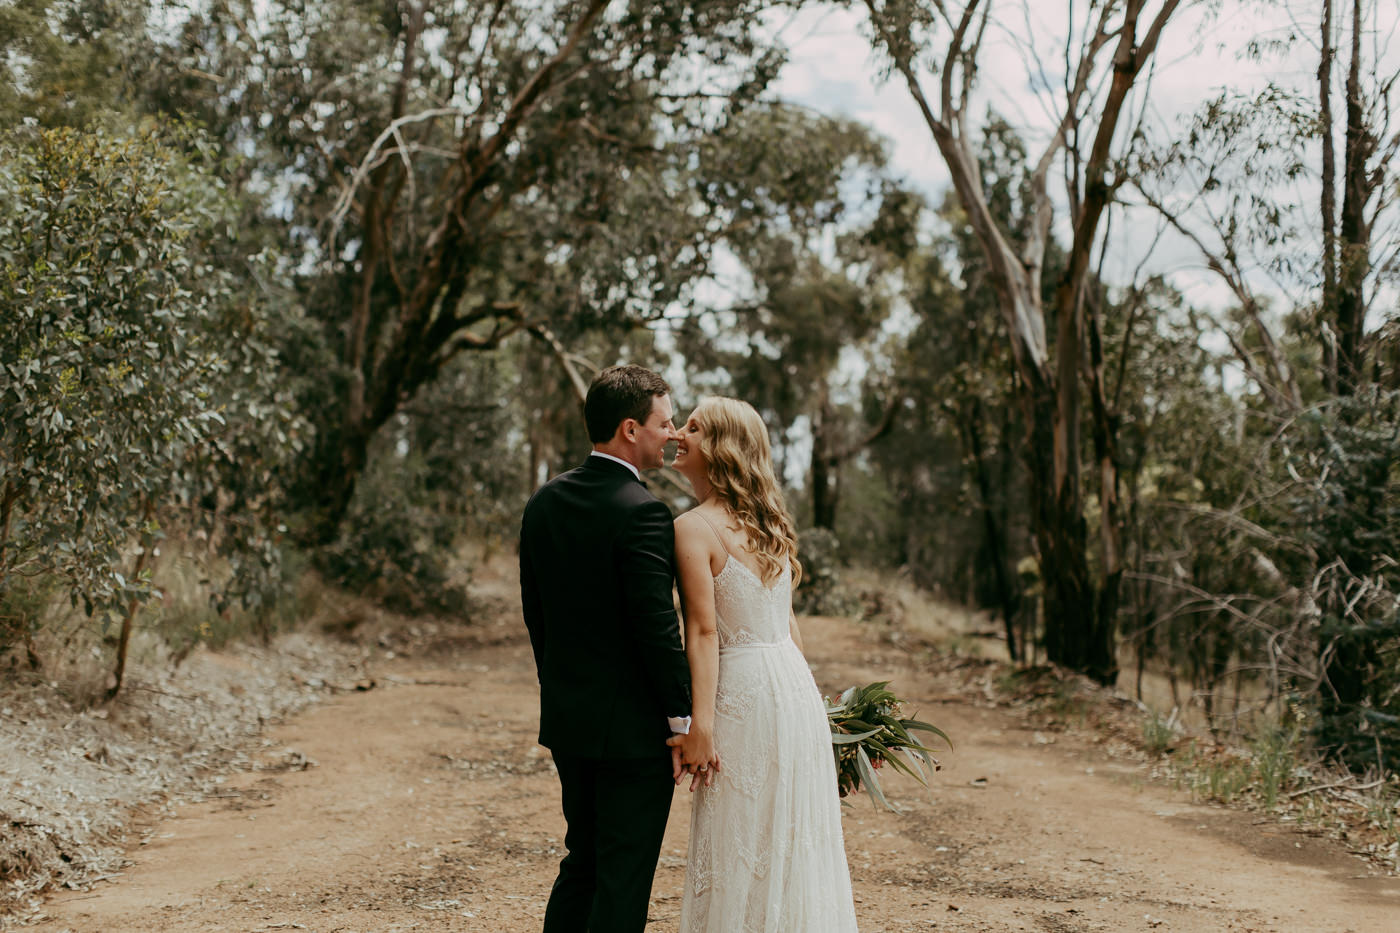 Anthony & Eliet - Wagga Wagga Wedding - Country NSW - Samantha Heather Photography-58.jpg